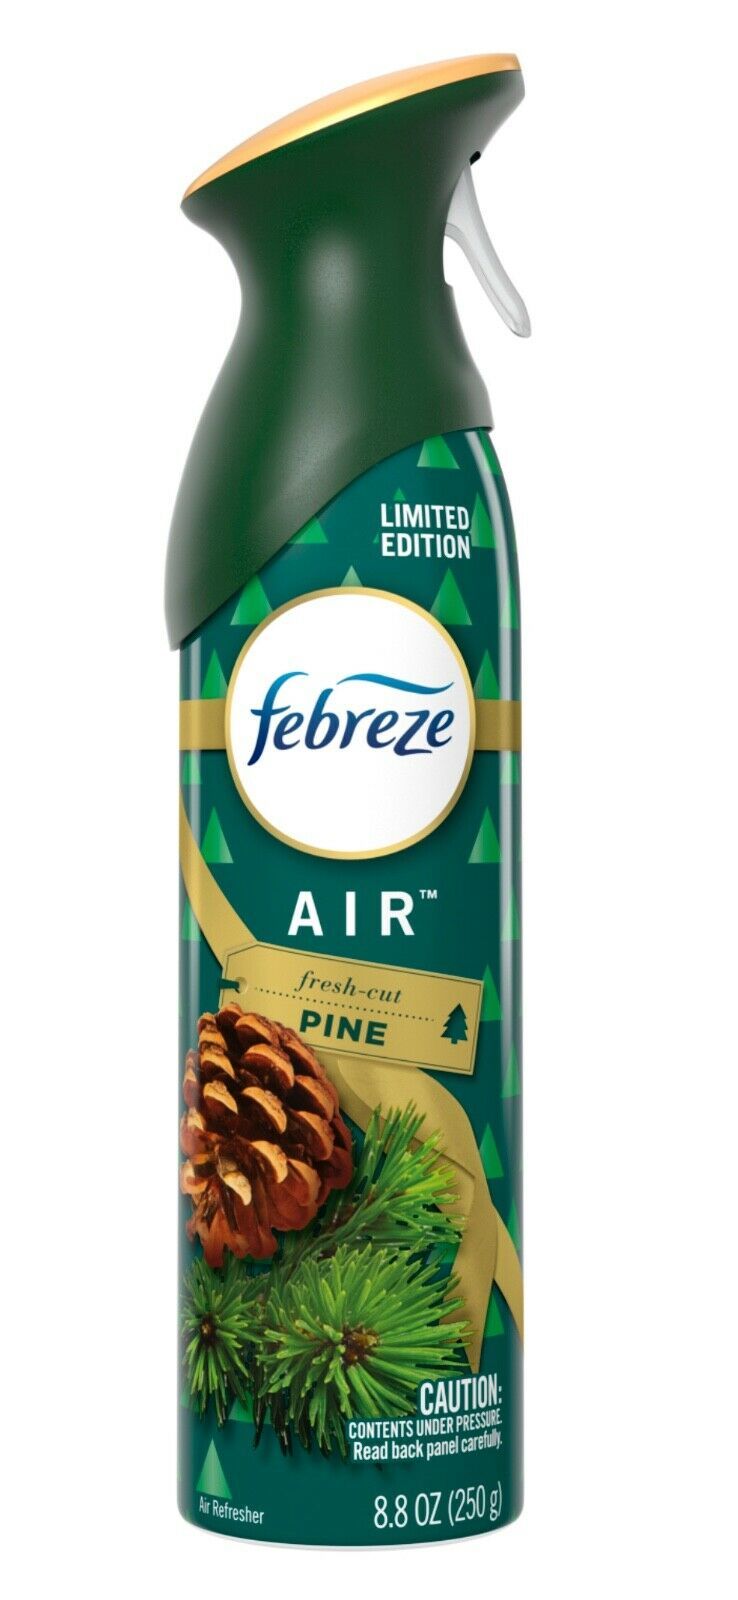 Primary image for Febreze Limited Edition Air Fresh Cut Pine Air Freshener Spray 8.8 oz